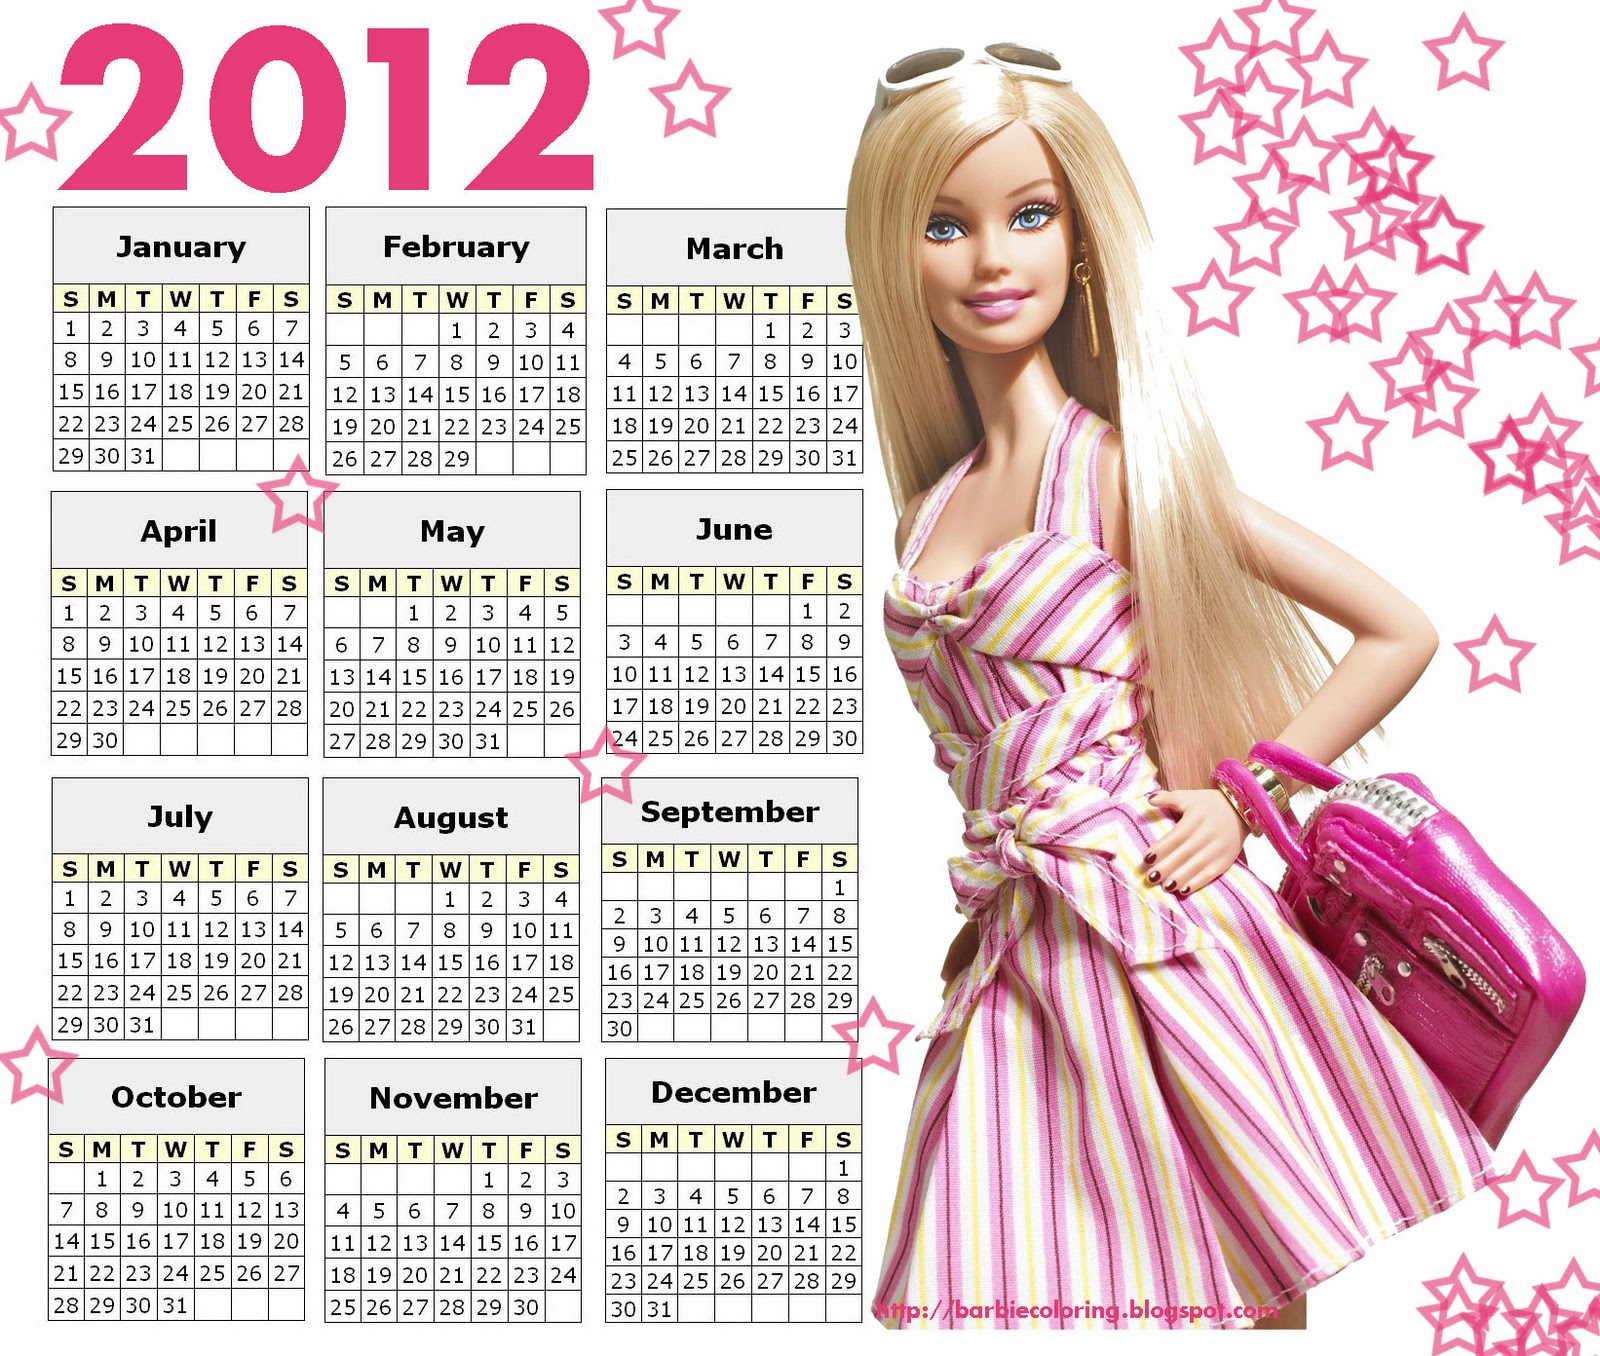 barbie-coloring-pages-2012-barbie-calendar-free-printable